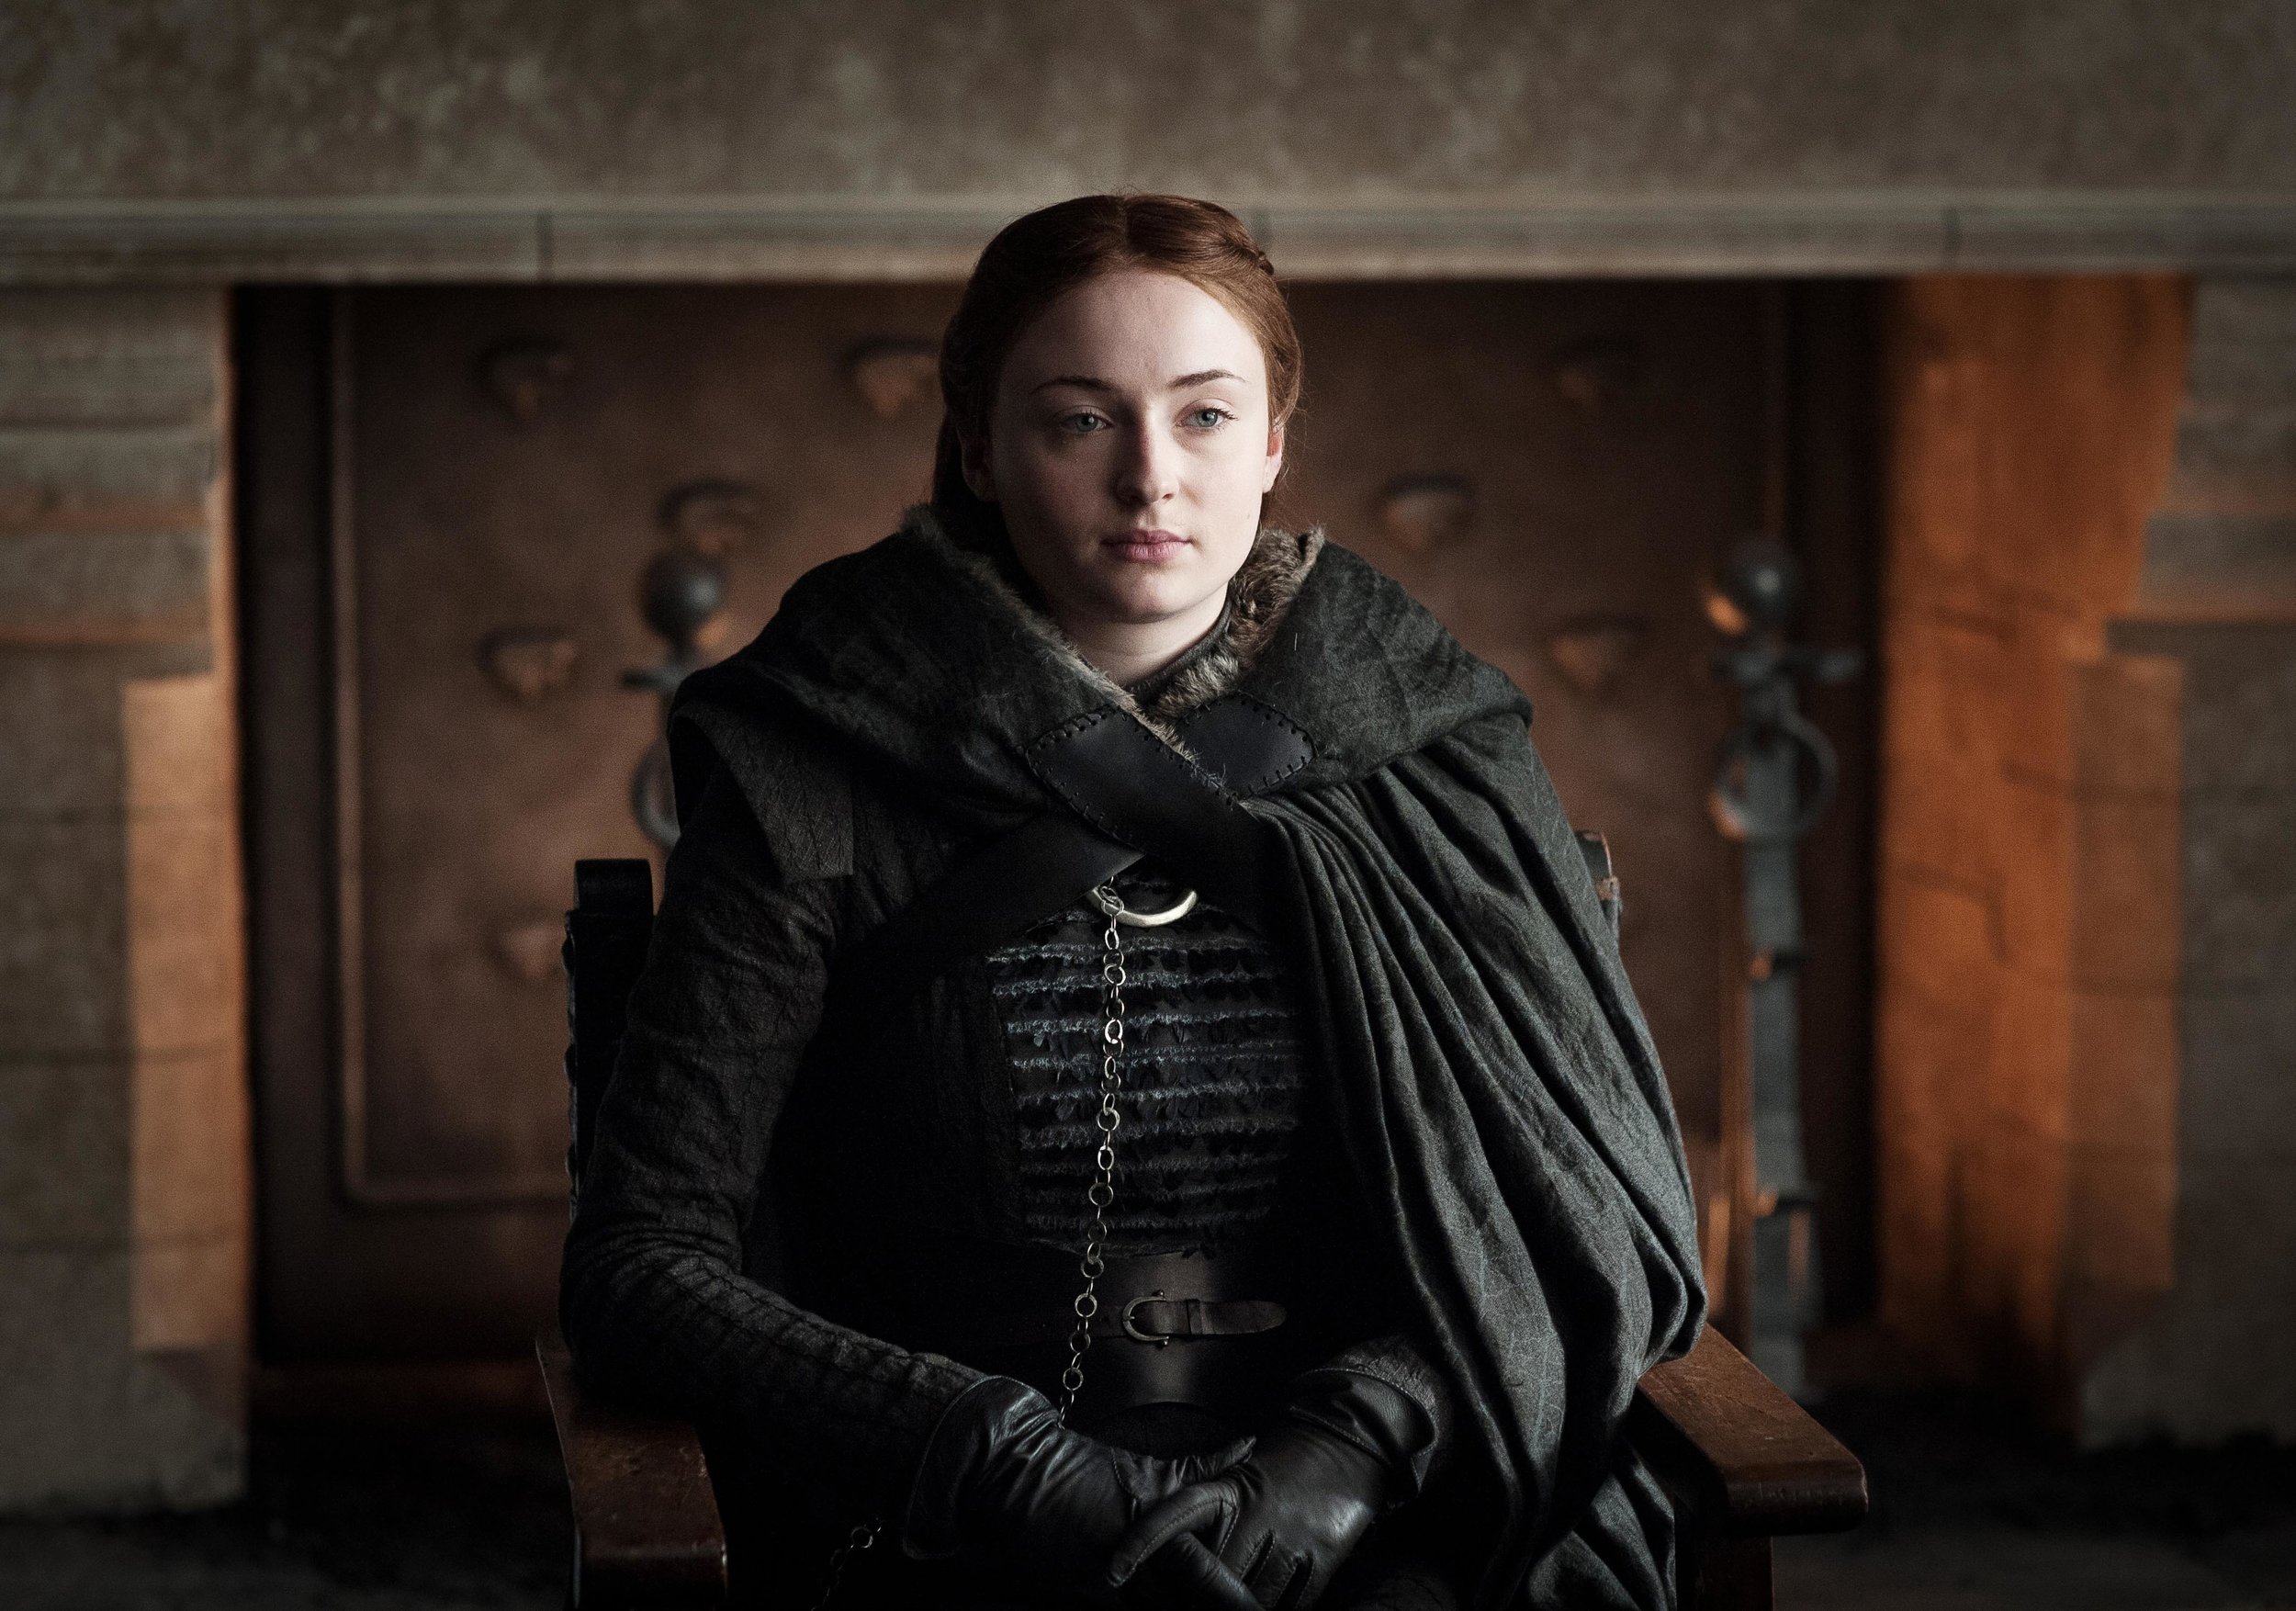   Sansa Stark (Sophie Turner)  Image - HBO 